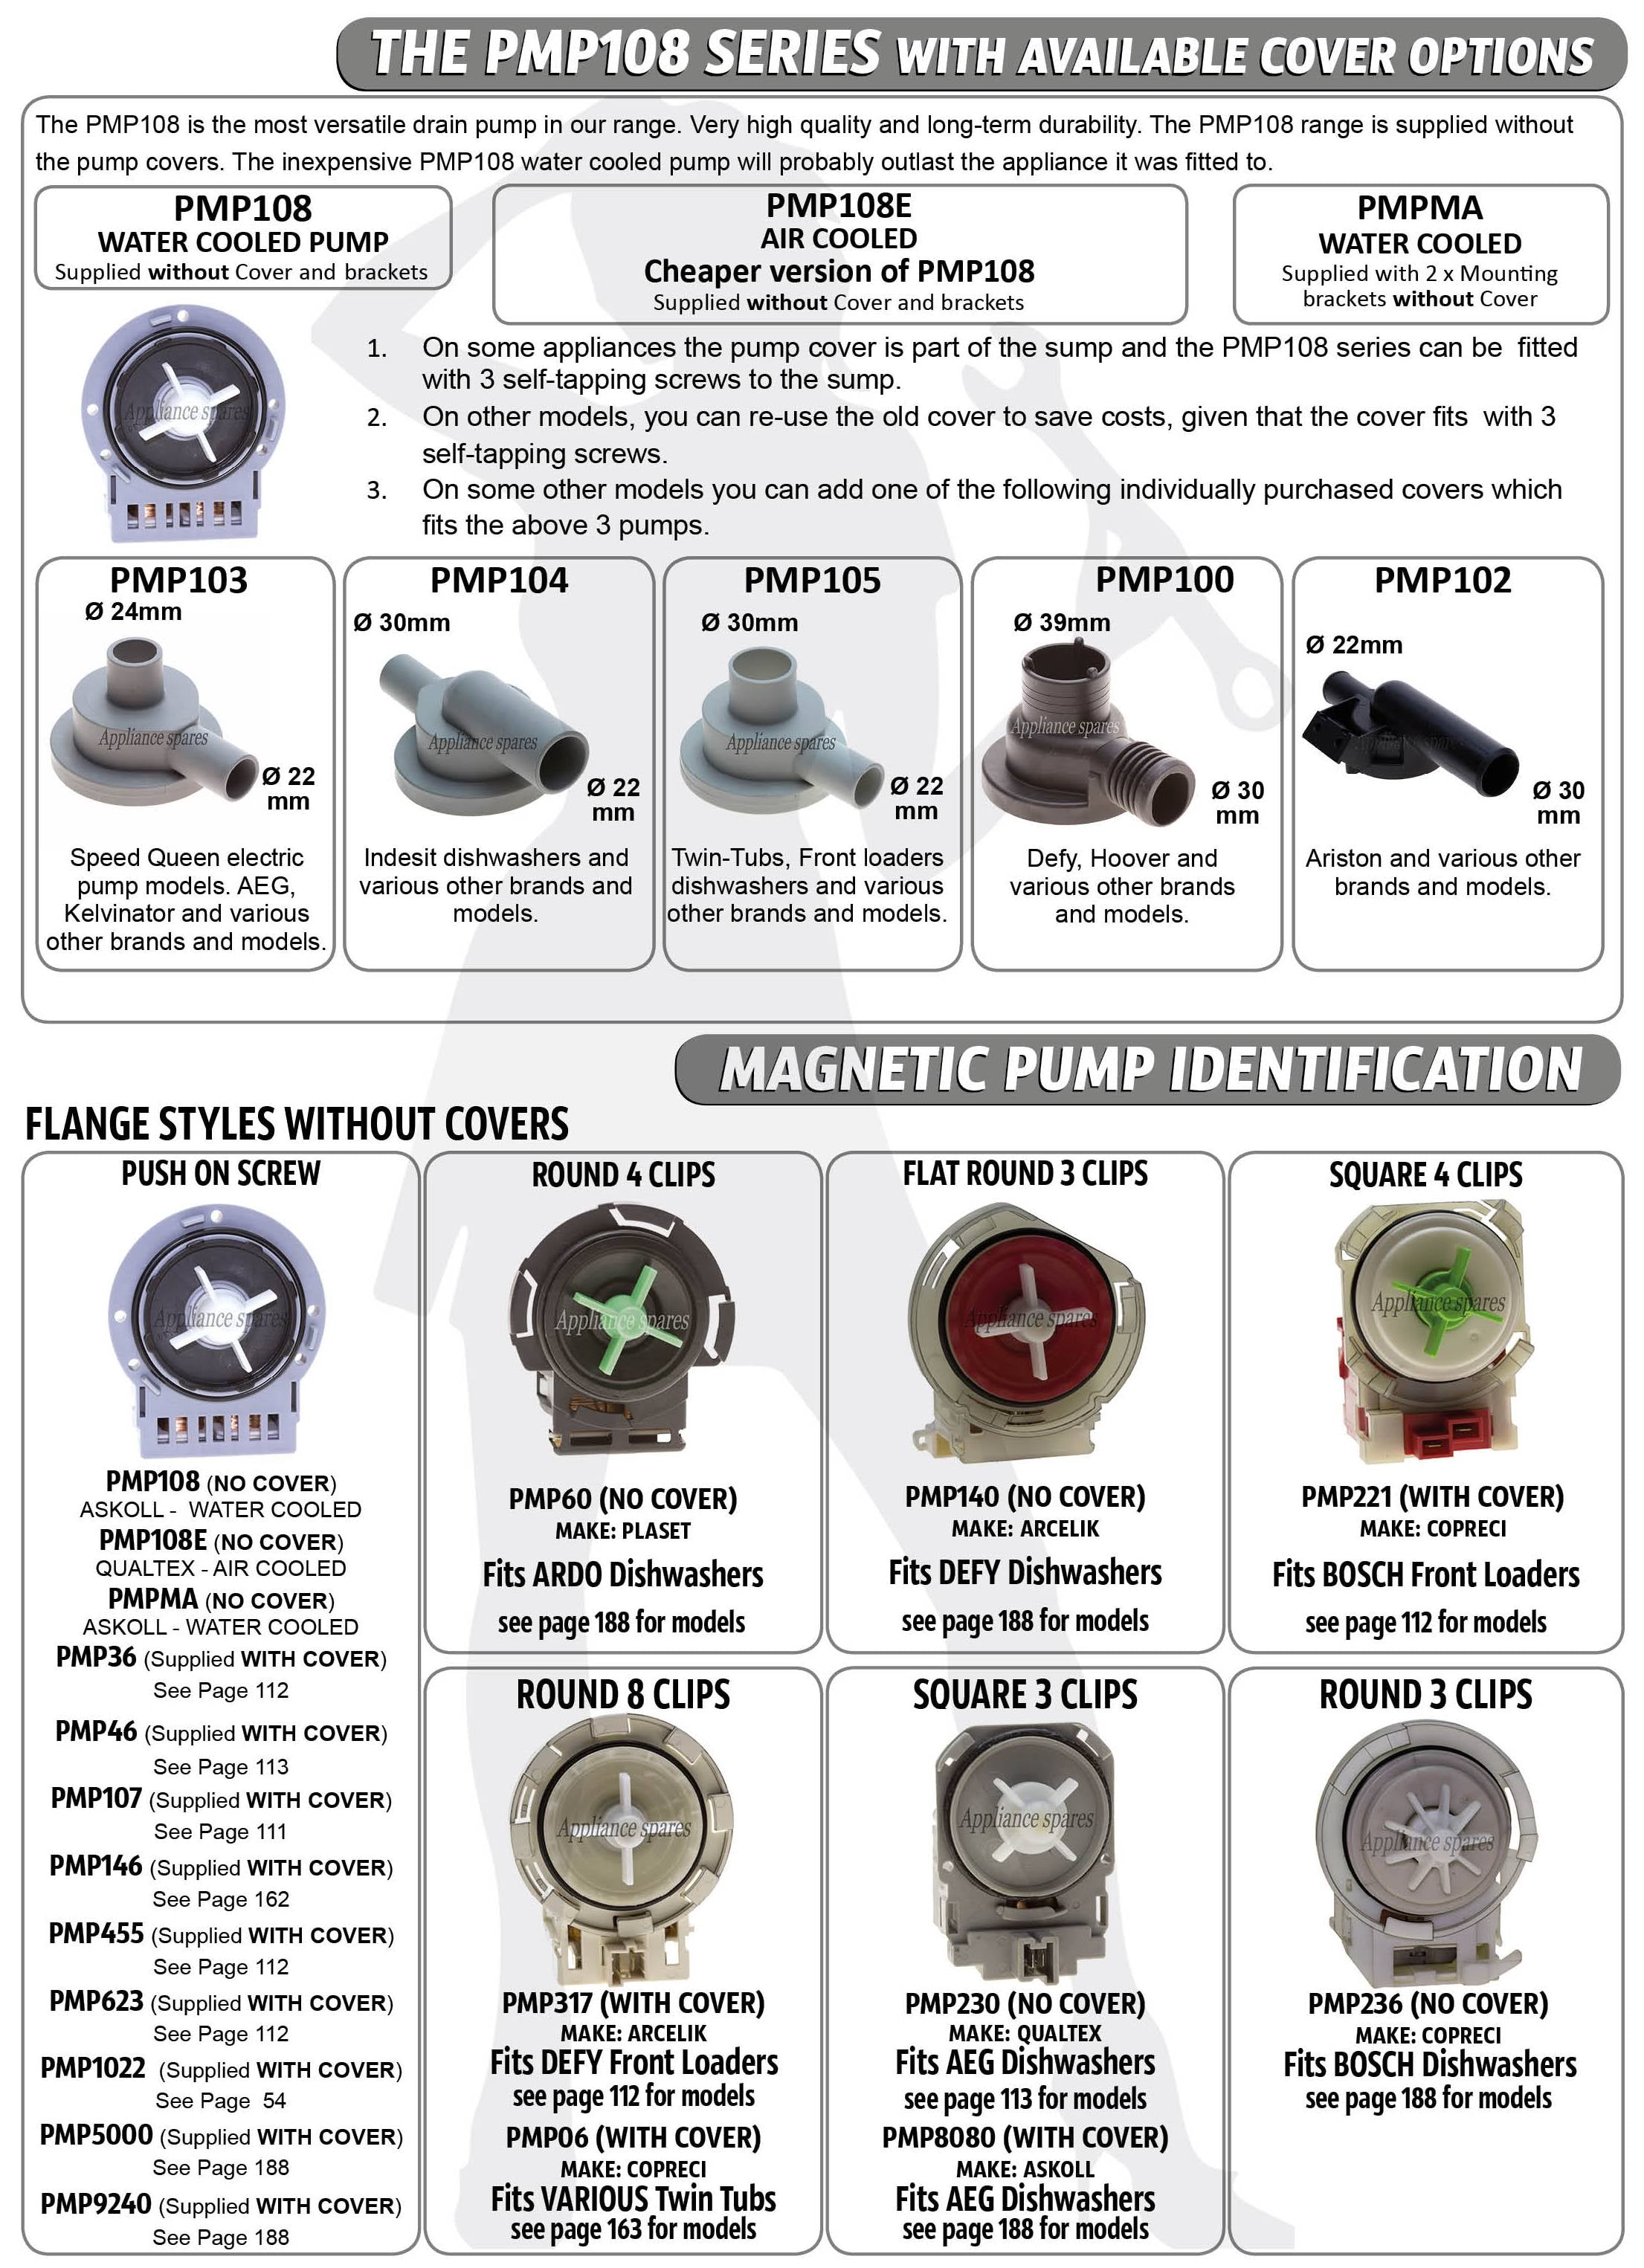 Magnetic Drain Pump Cover